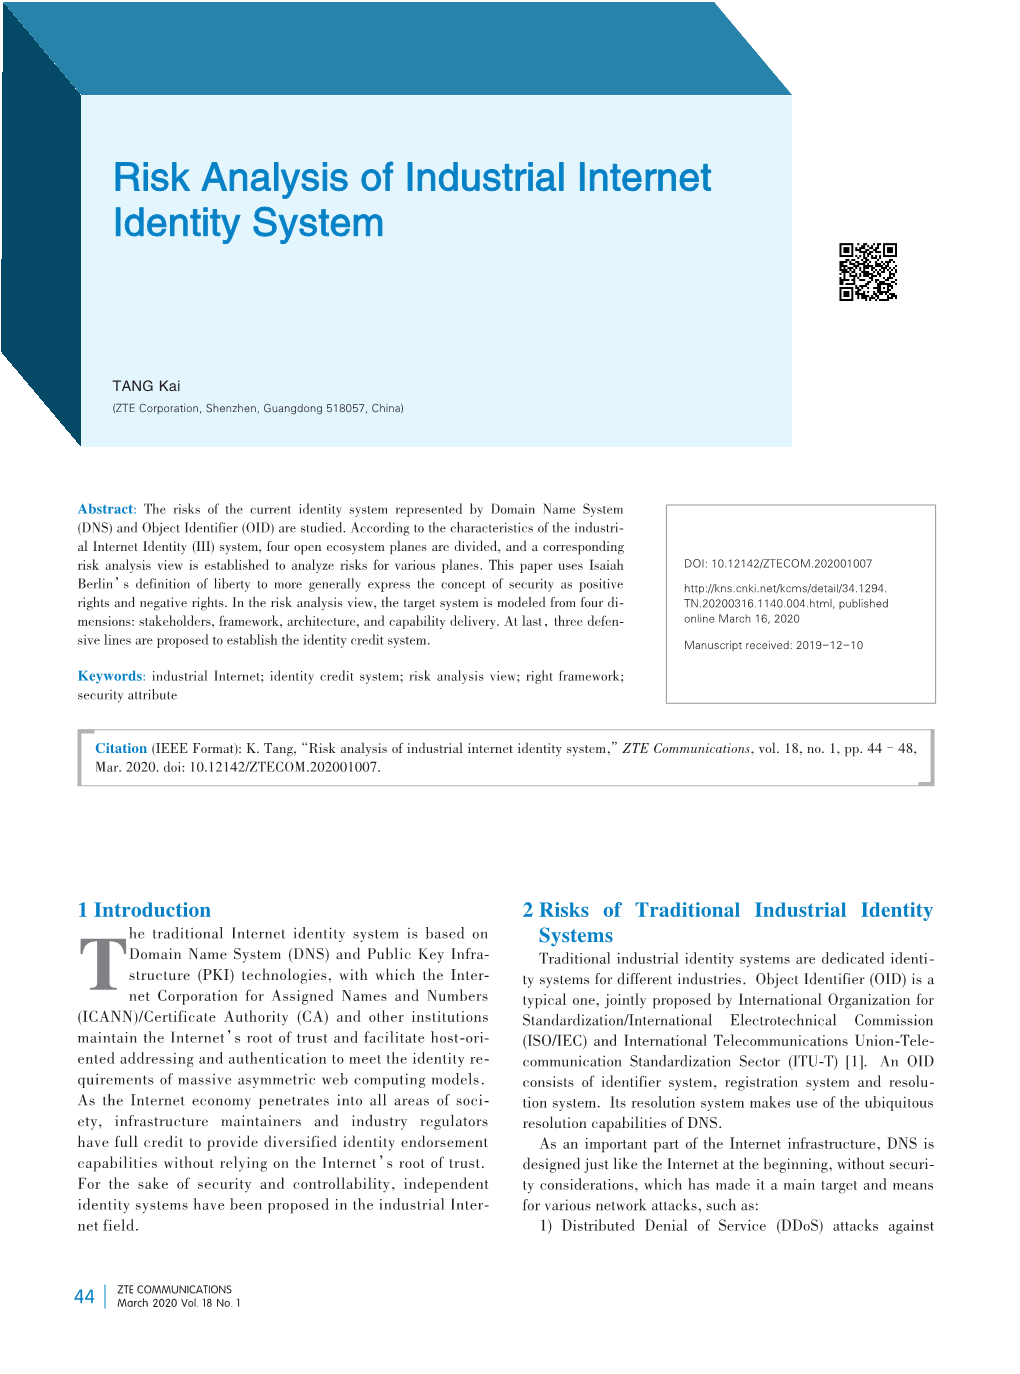 Risk Analysis of Industrial Internet Identity System